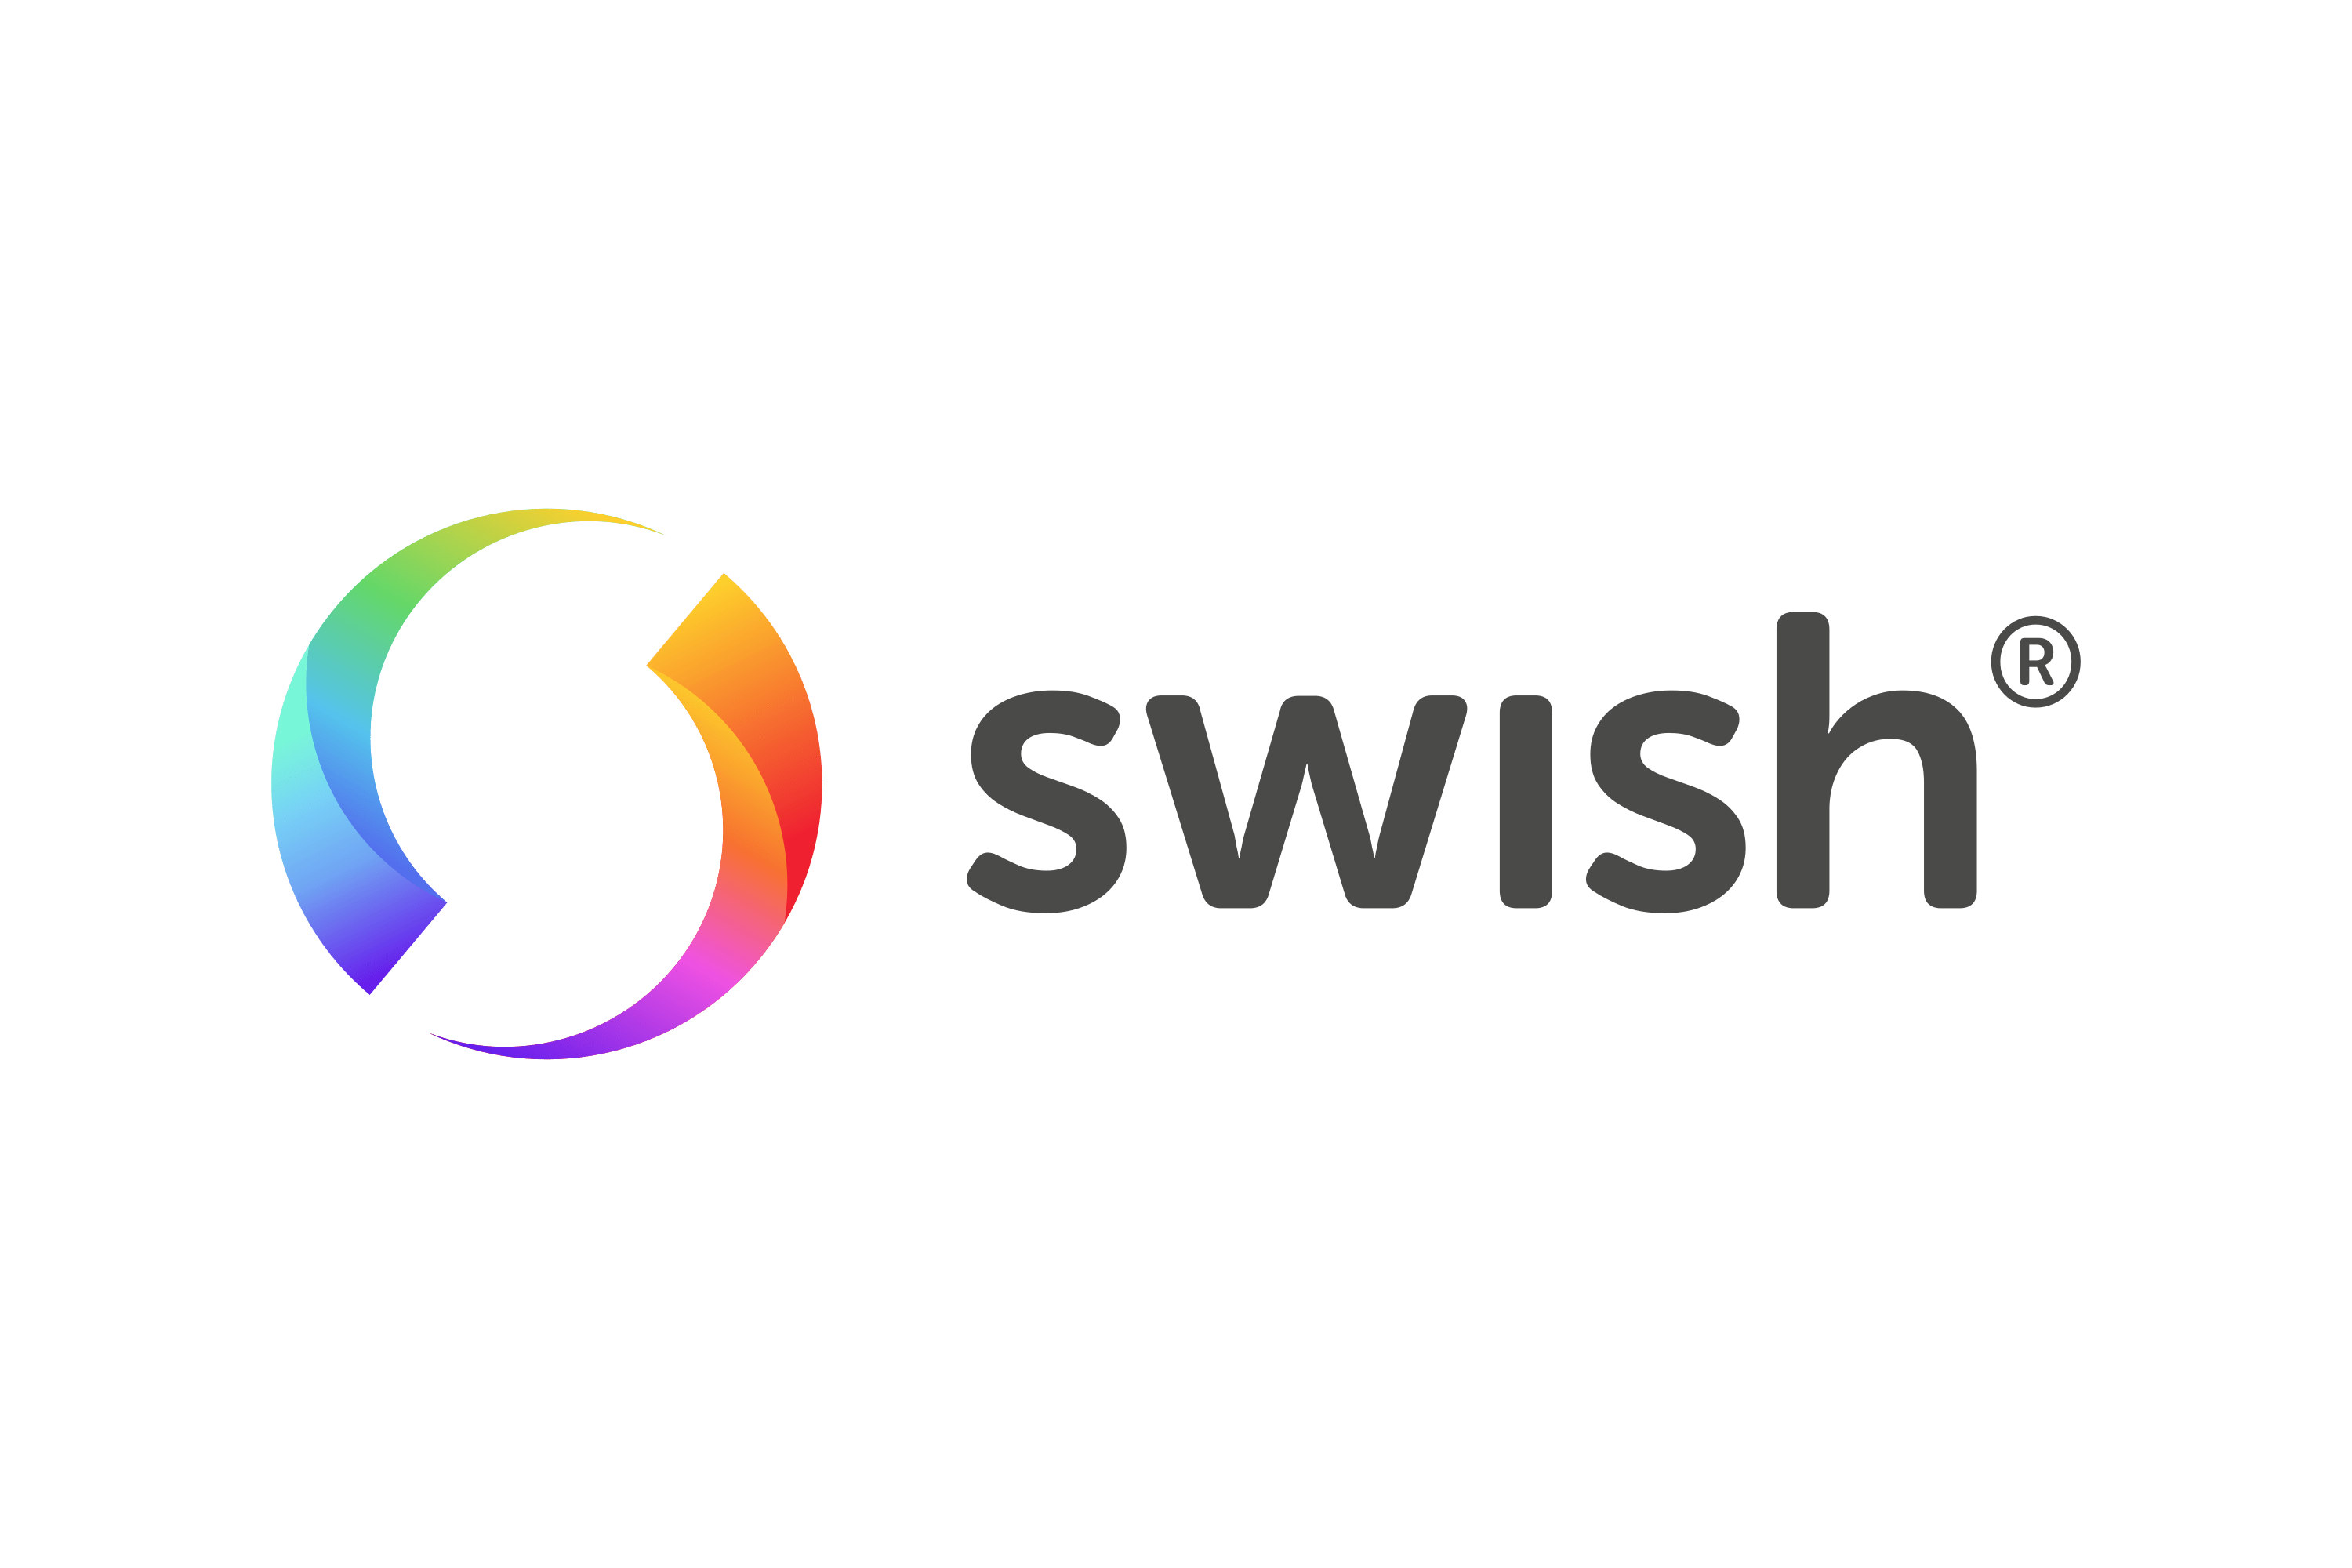 Download Swish Logo in SVG Vector or PNG File Format - Logo.wine